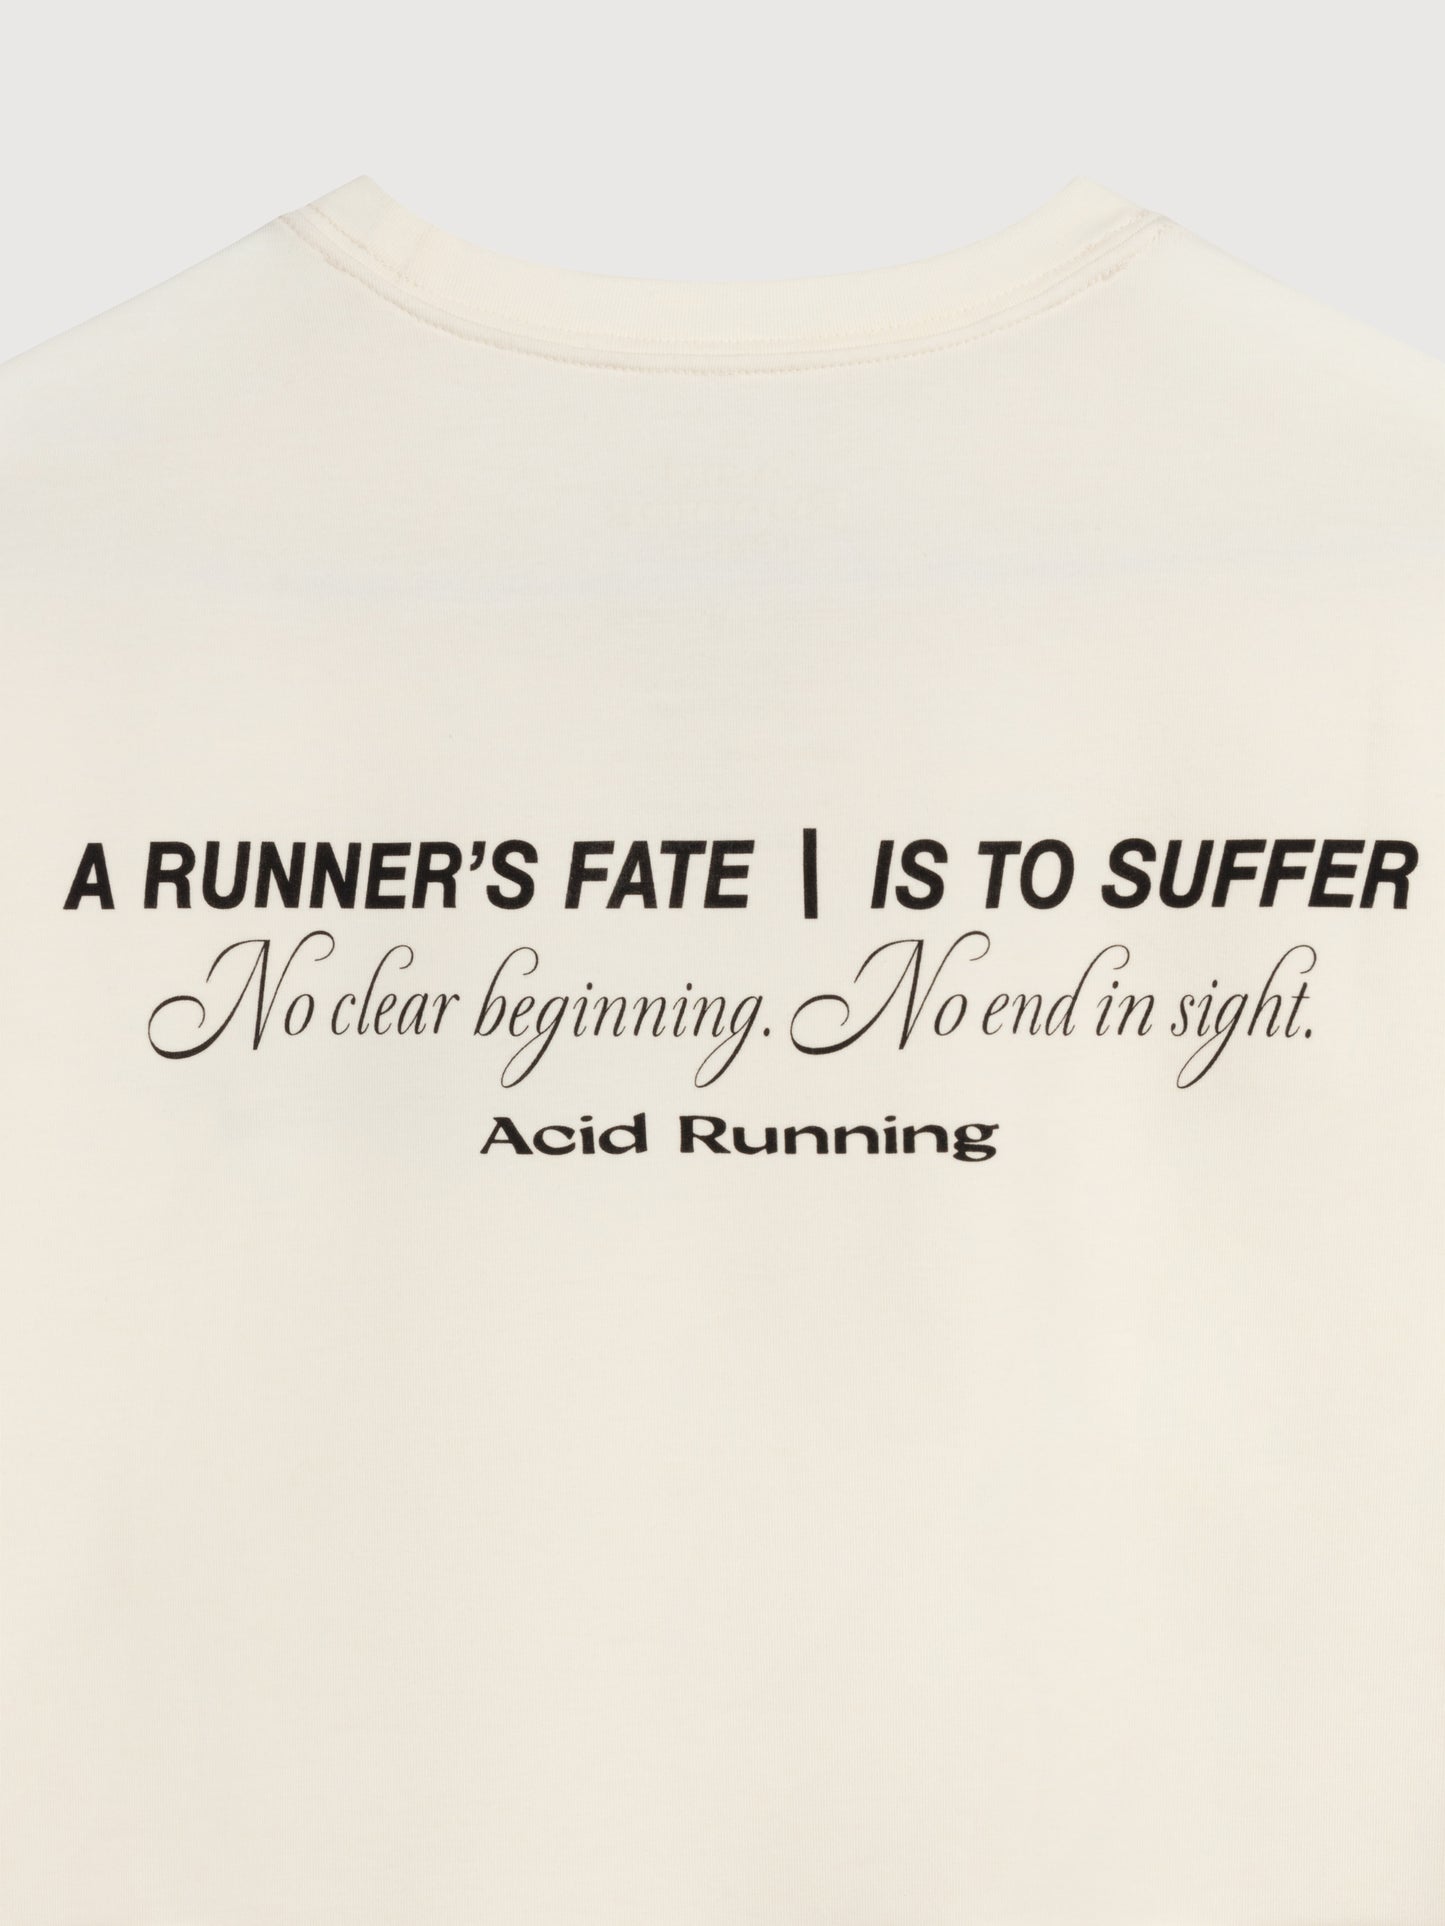 Runner's Fate T-Shirt - Bone